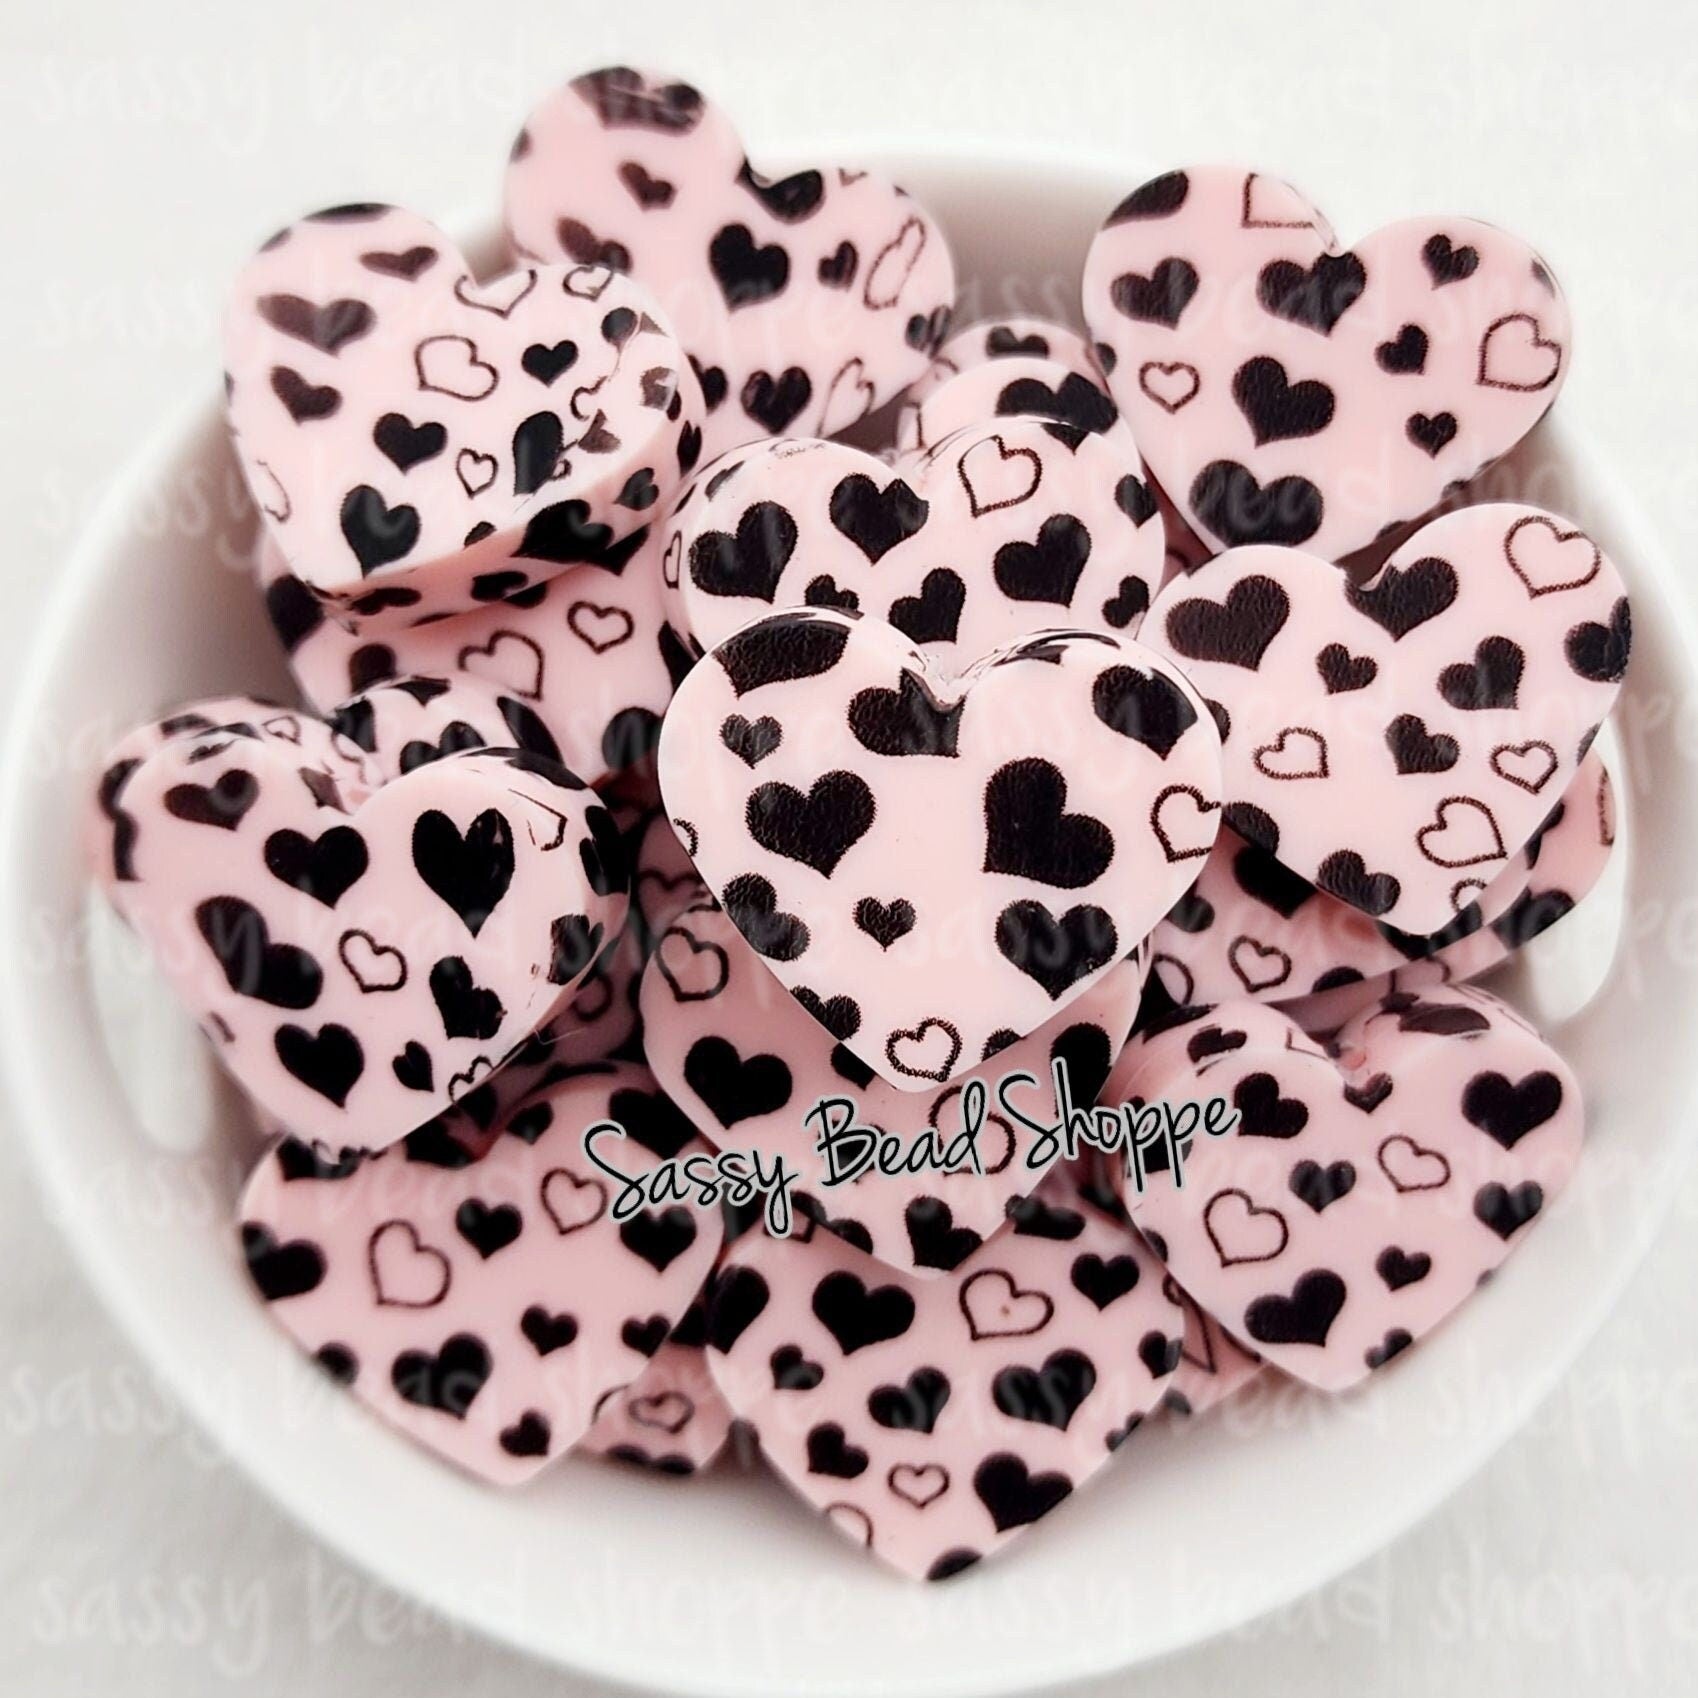 Sassy Bead Shoppe Pink & Black Heart Focal Bead